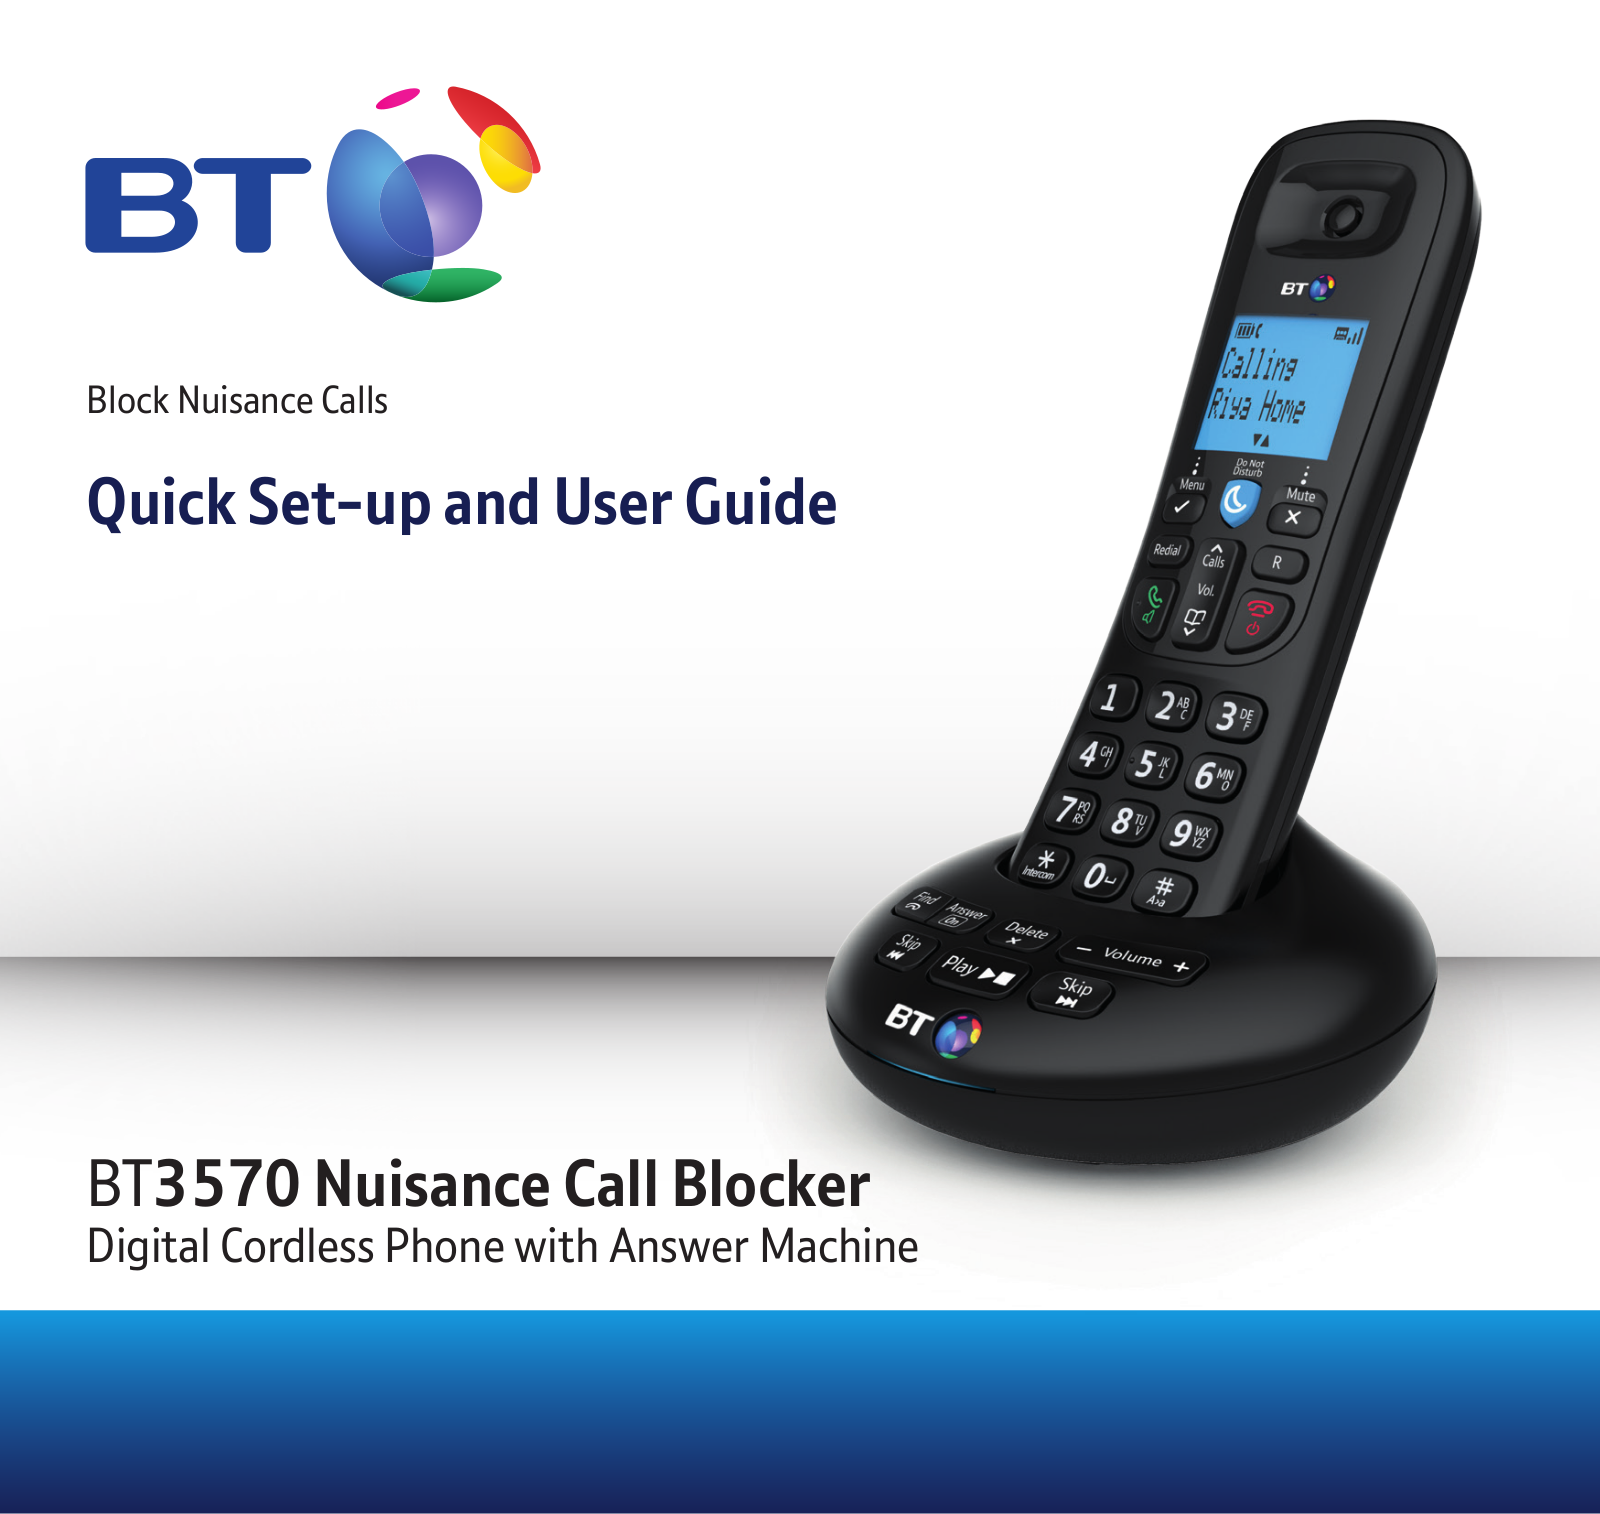 BT 3570 Nuisance Call Blocker Instruction manual